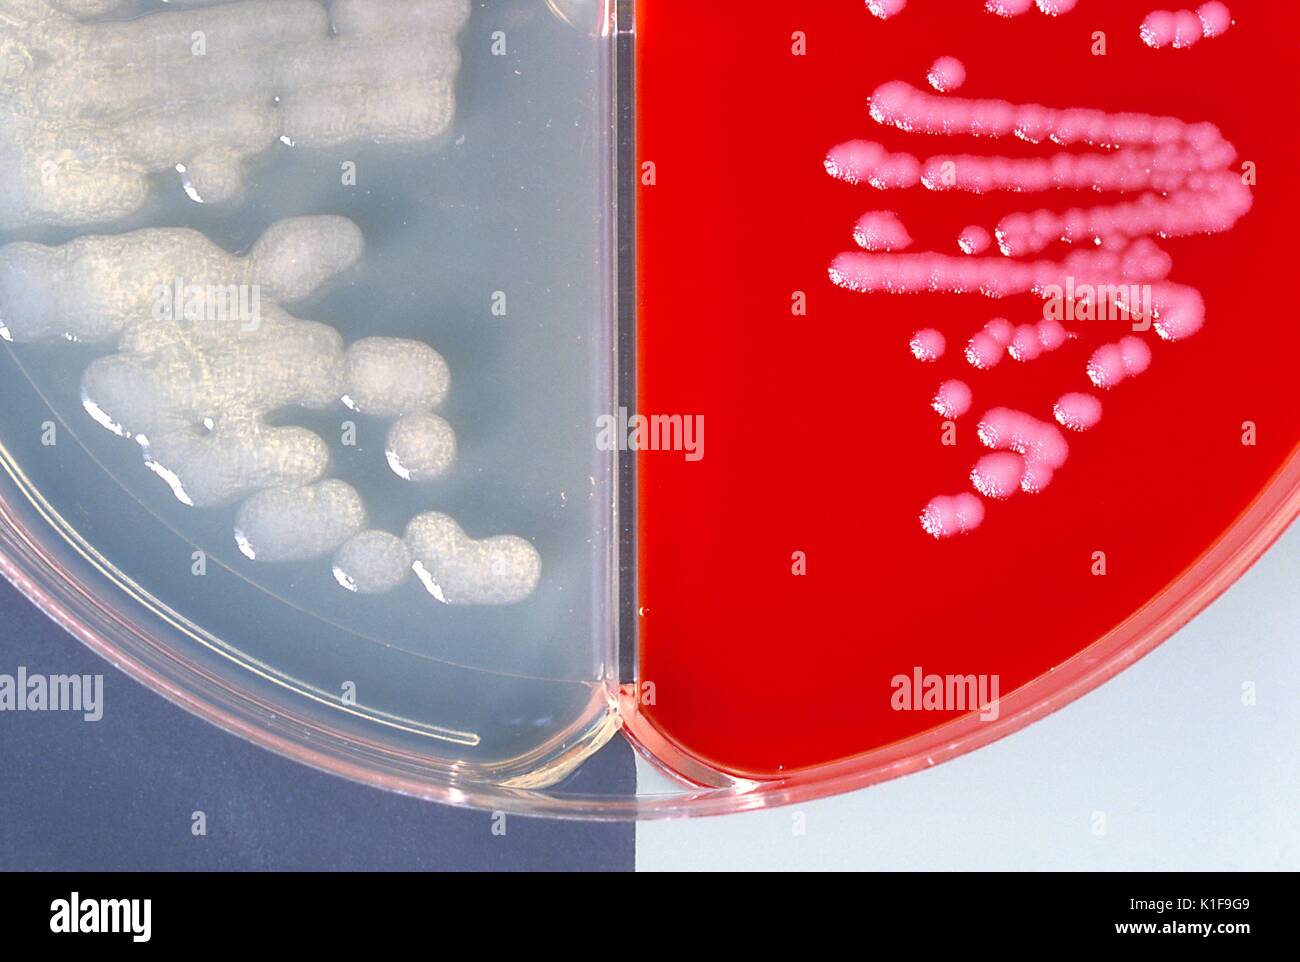 Placa de agar sangre fotografías e imágenes de alta resolución - Alamy